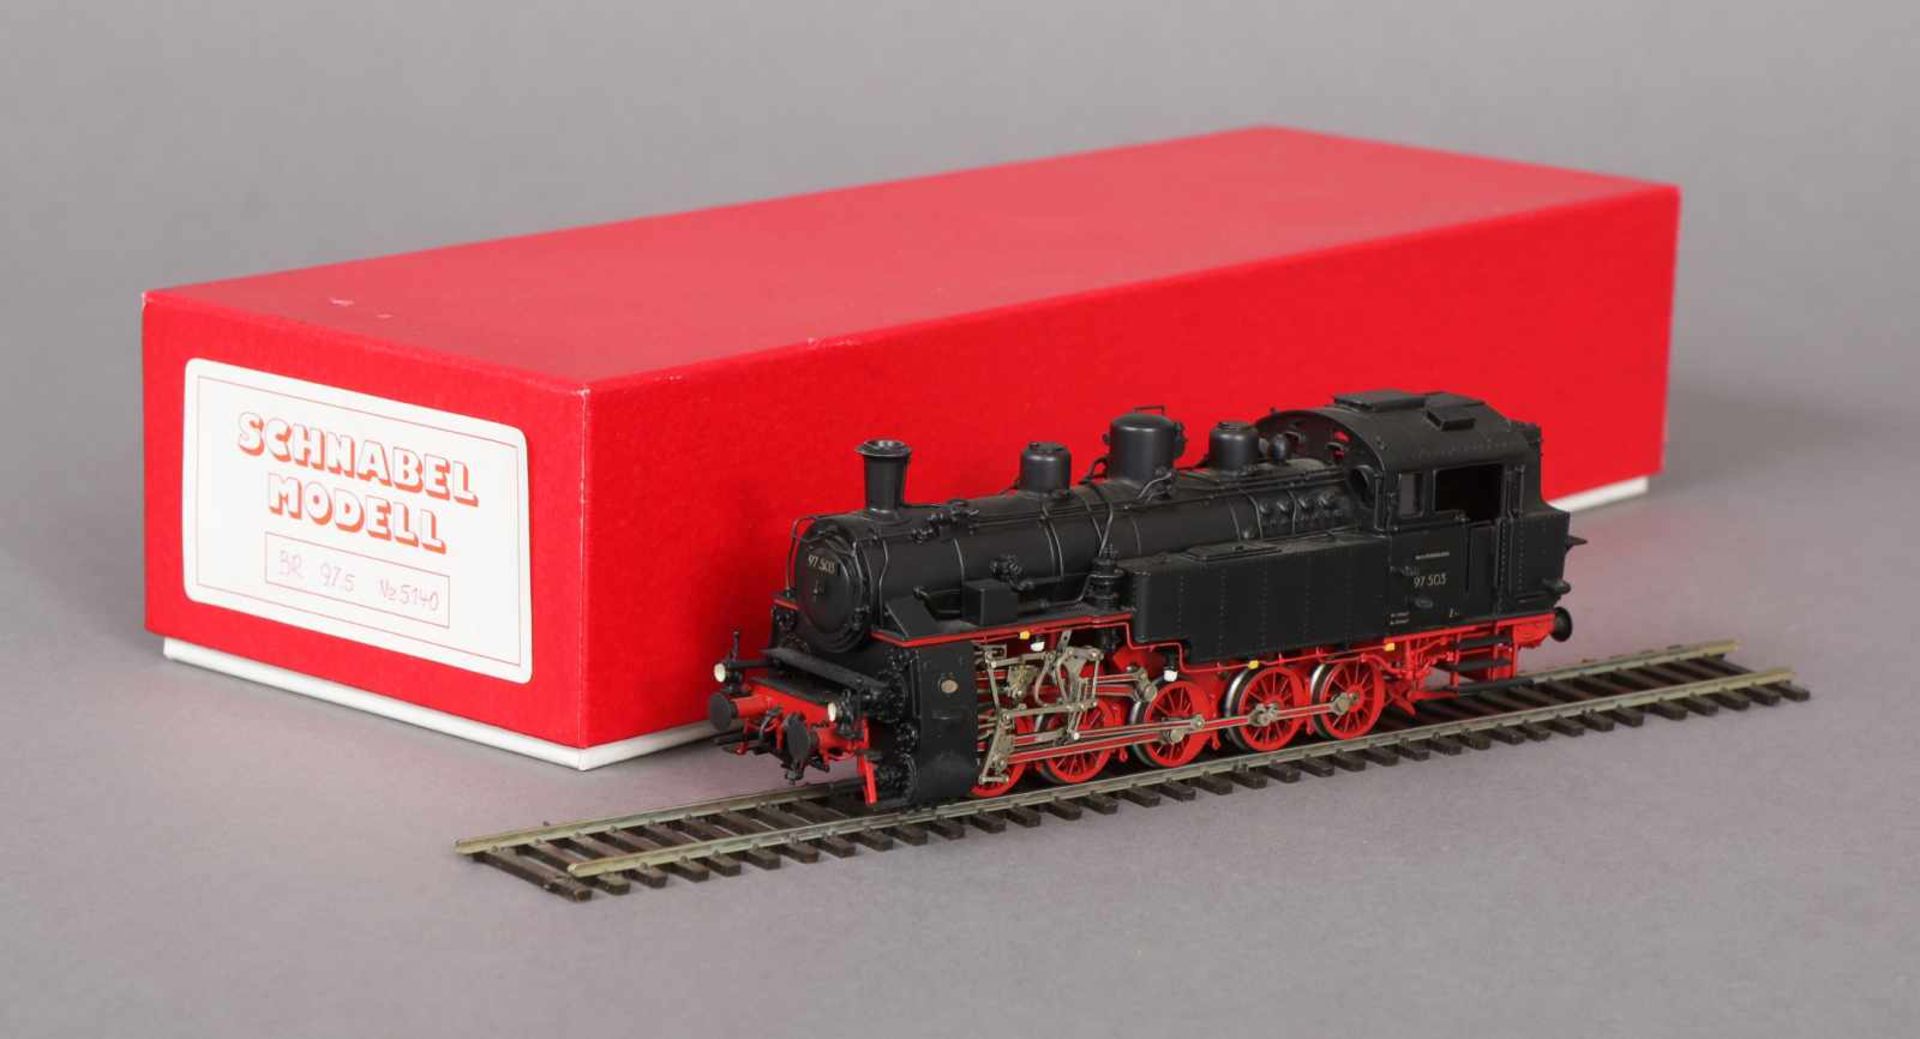 Schnabel Modell-Lok Modell 97 503 DR, Nr. 5149, Spur HO, schwarz-rote Ausführung, in original Box,